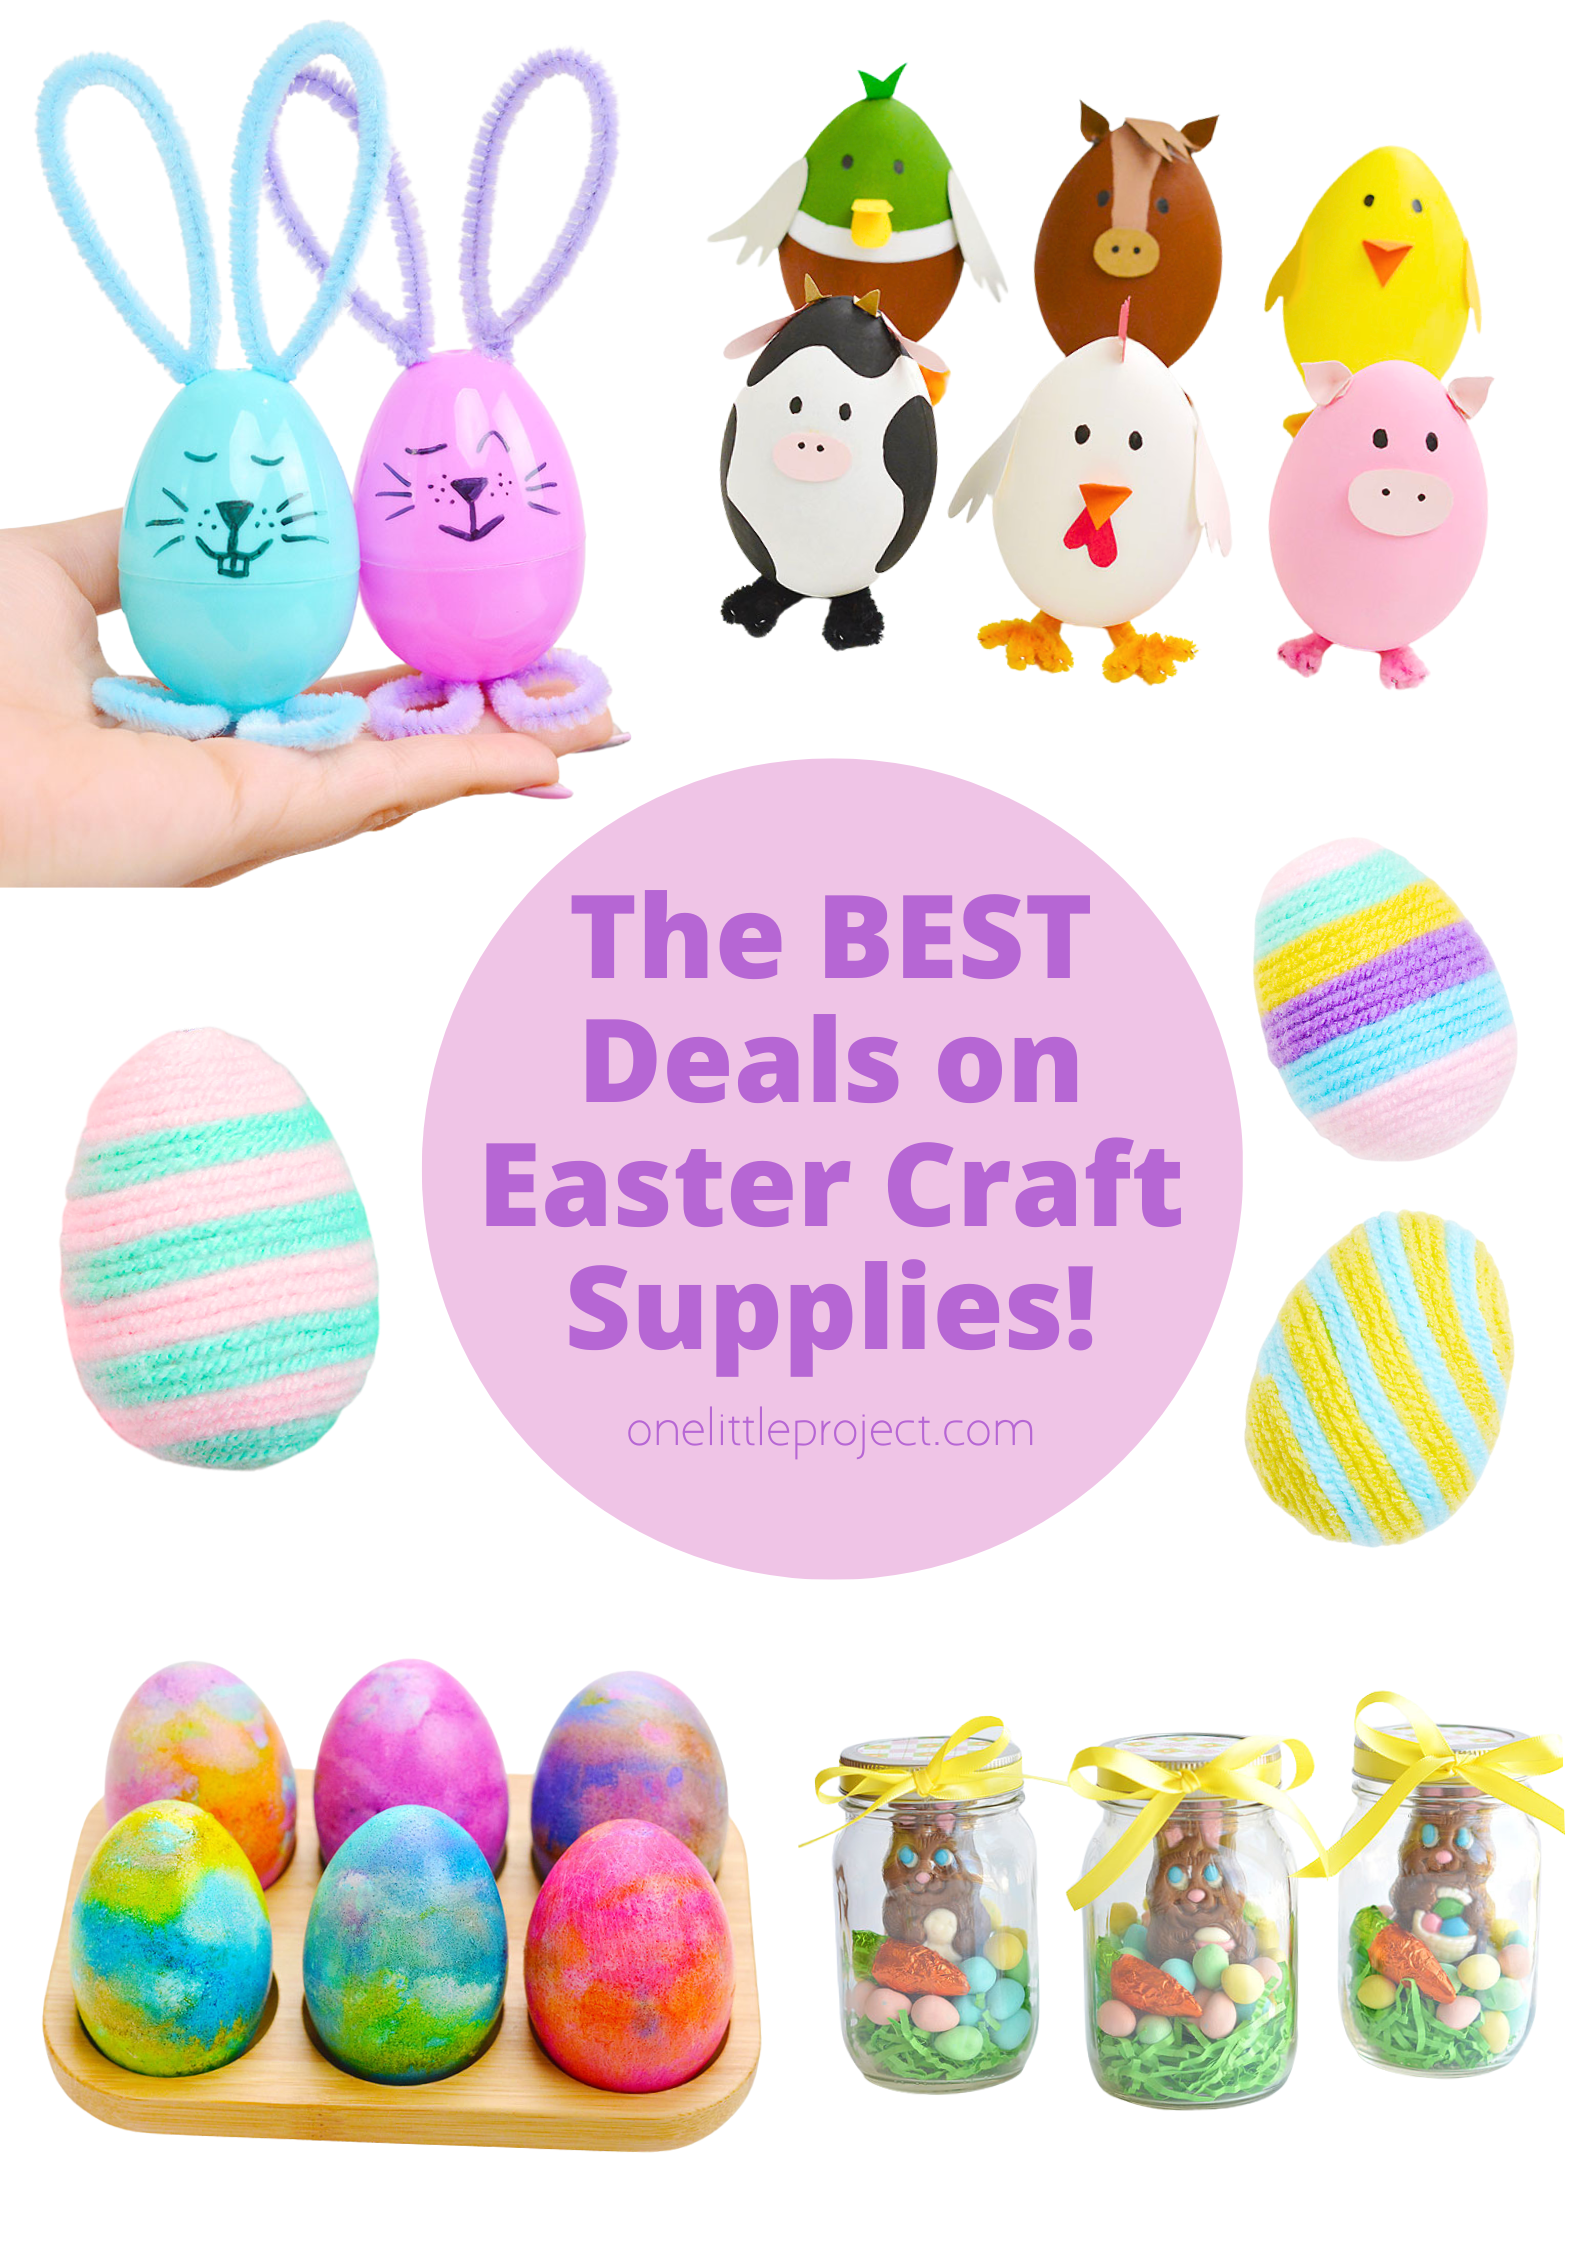 Deals on Easter craft supplies